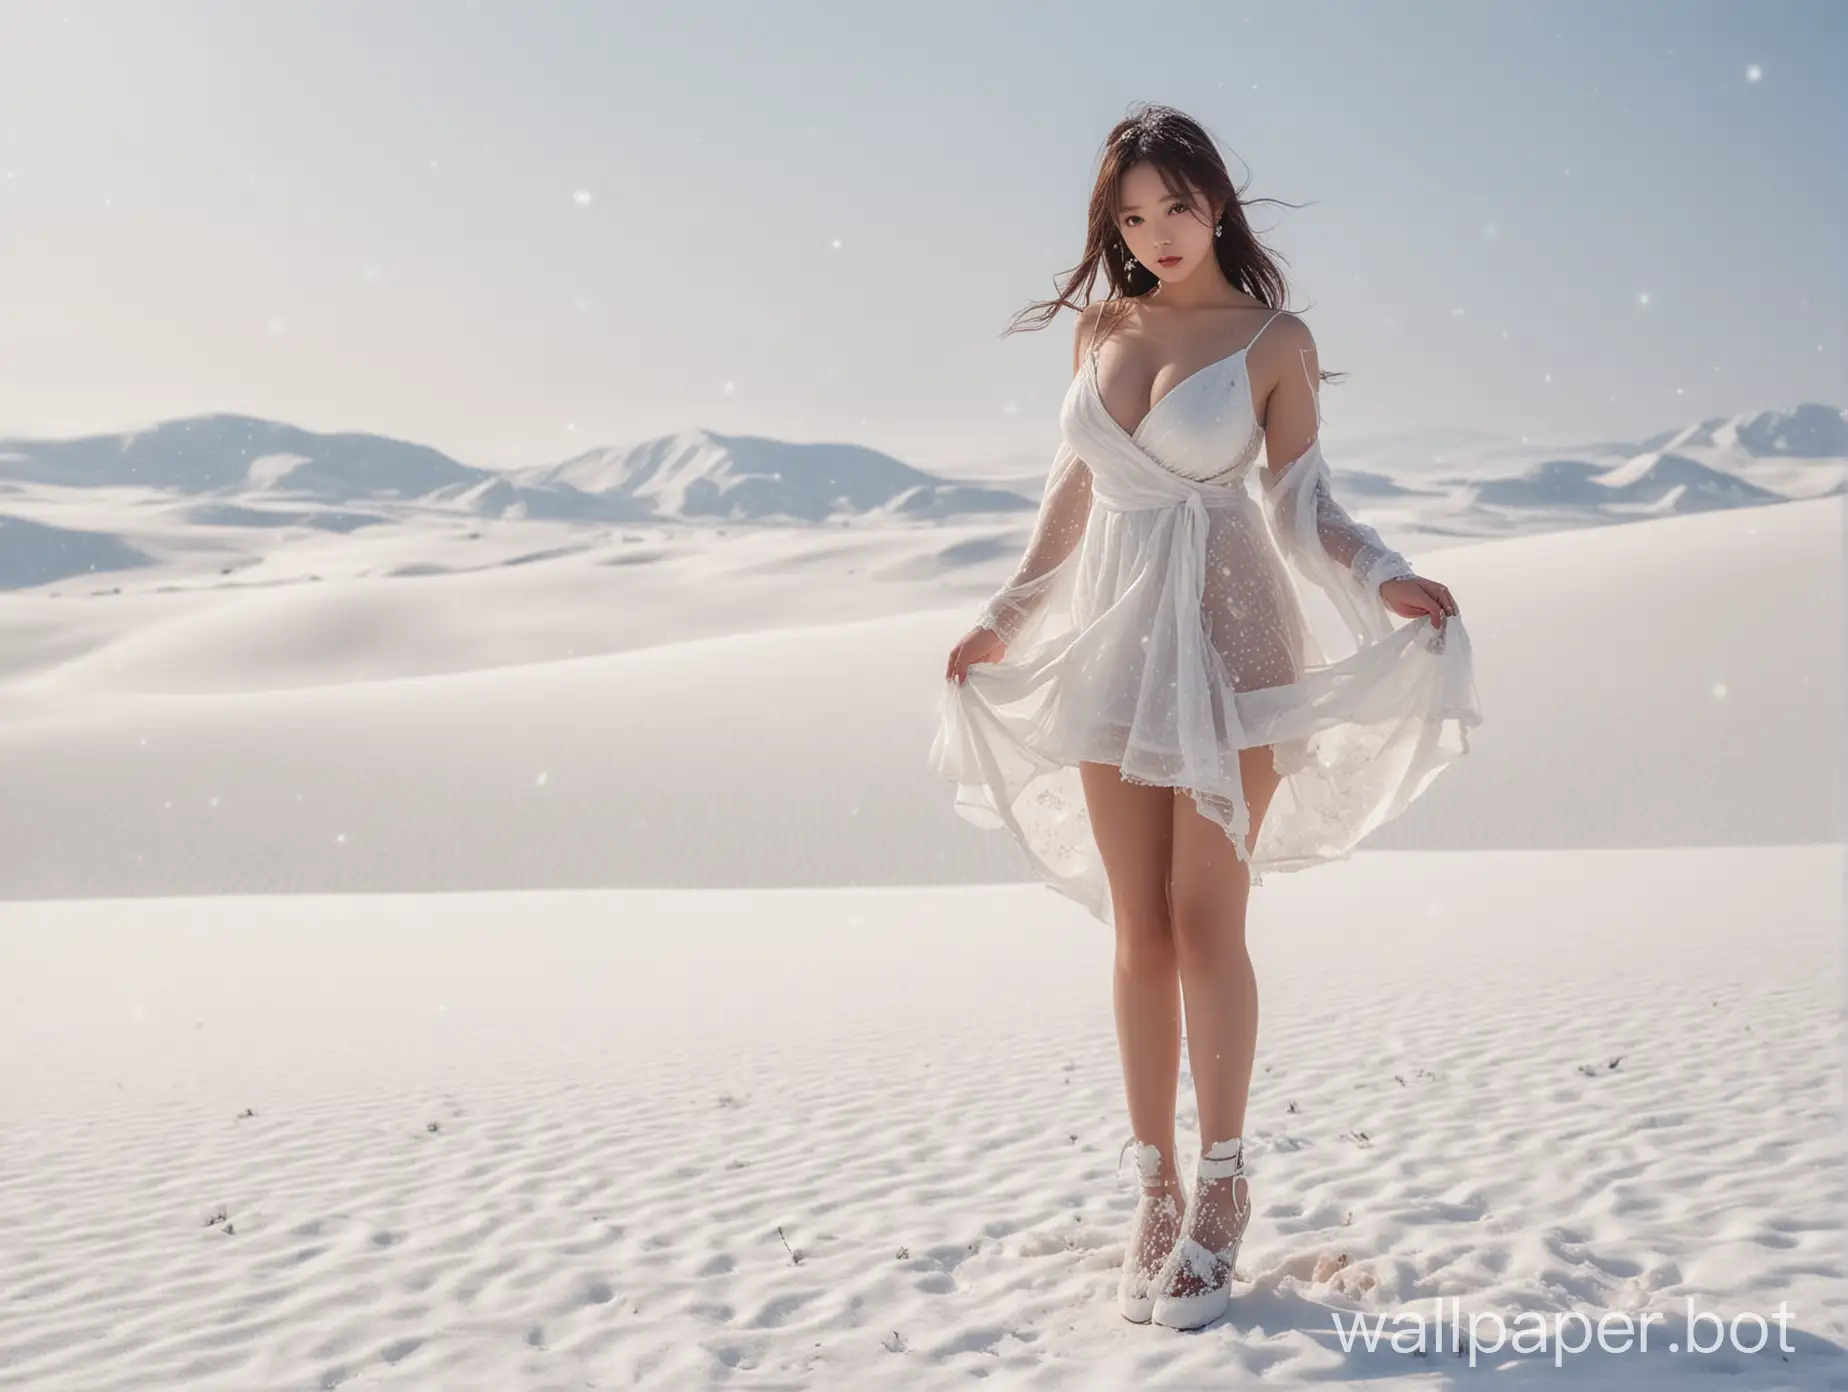 Stylish-Japanese-Woman-in-Sheer-Dress-Amid-Snowy-Dunes